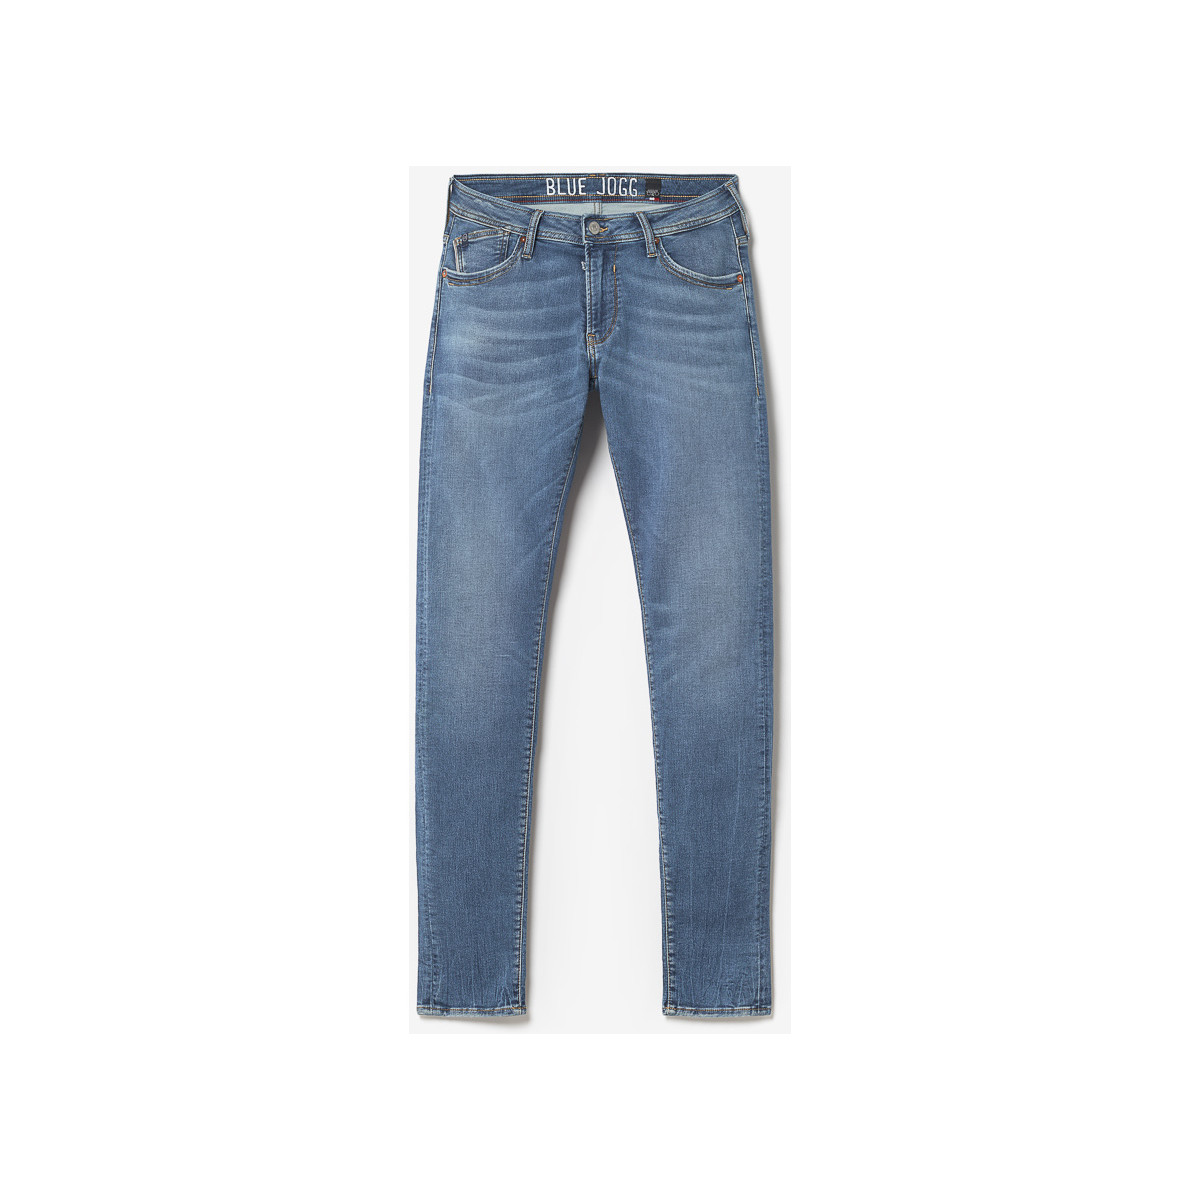 Le Temps des Cerises Bleu Jogg 700/11 adjusted jeans bleu 4hvWCxcq